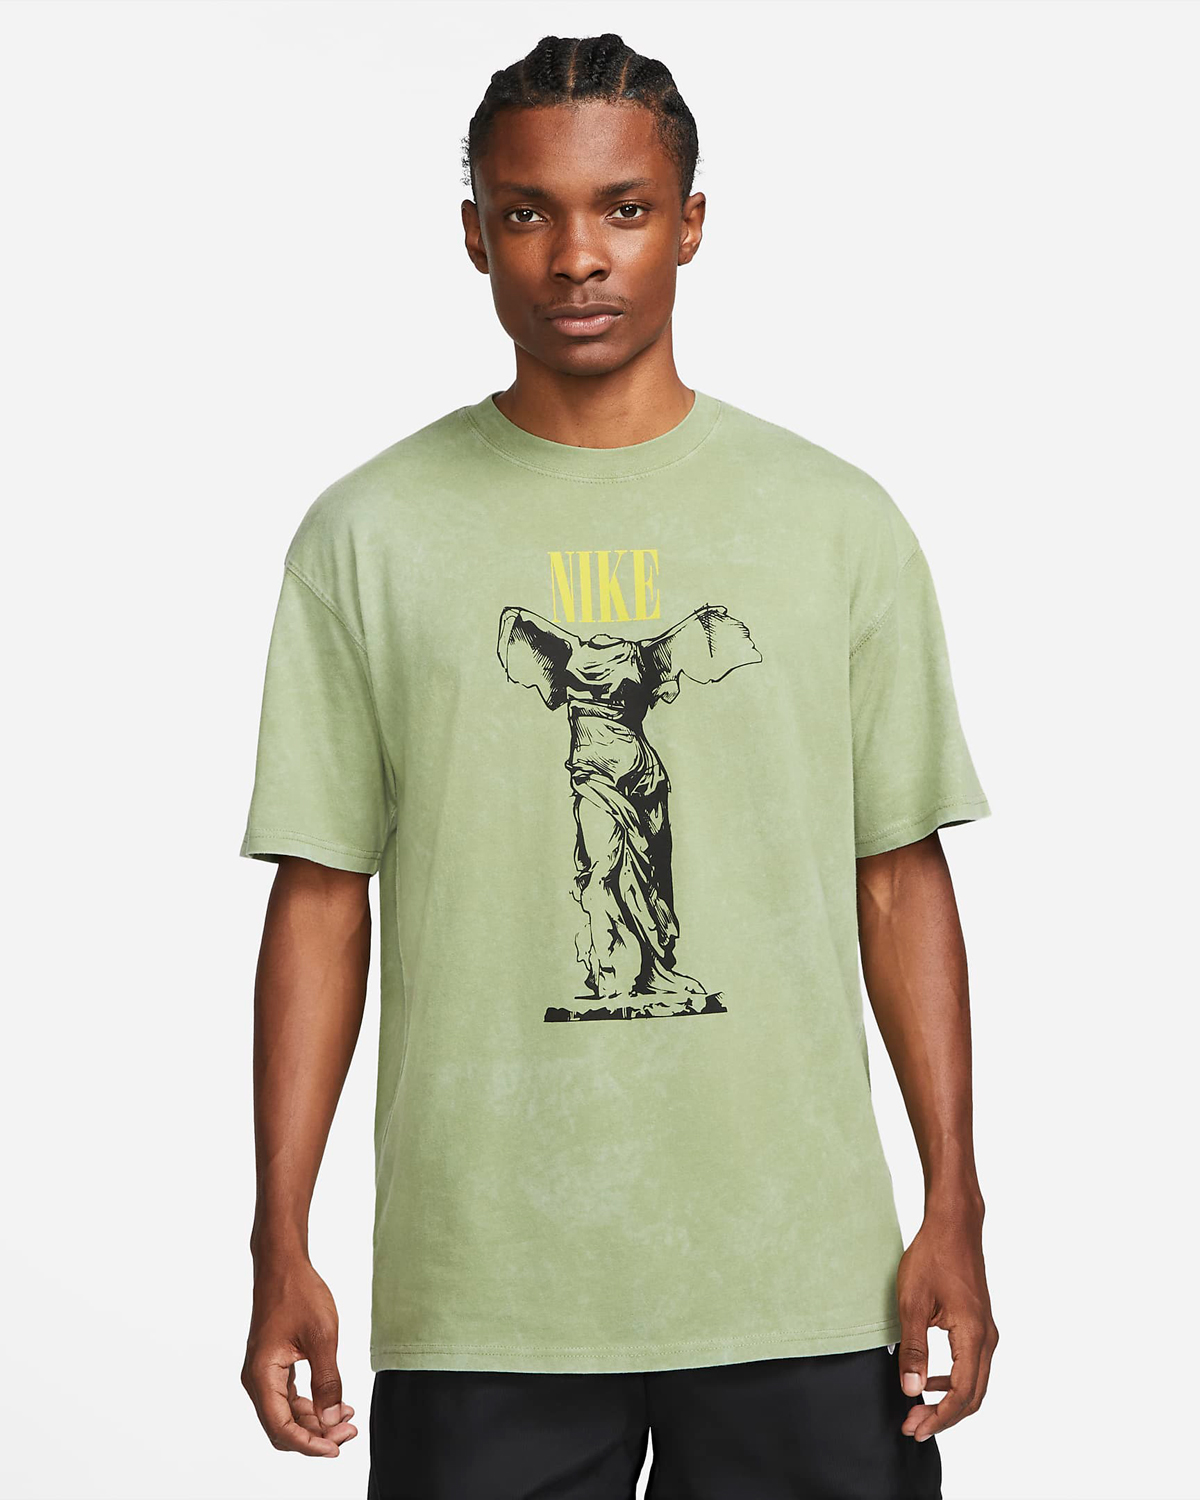 Nike-Basketball-T-Shirt-Alligator-Green